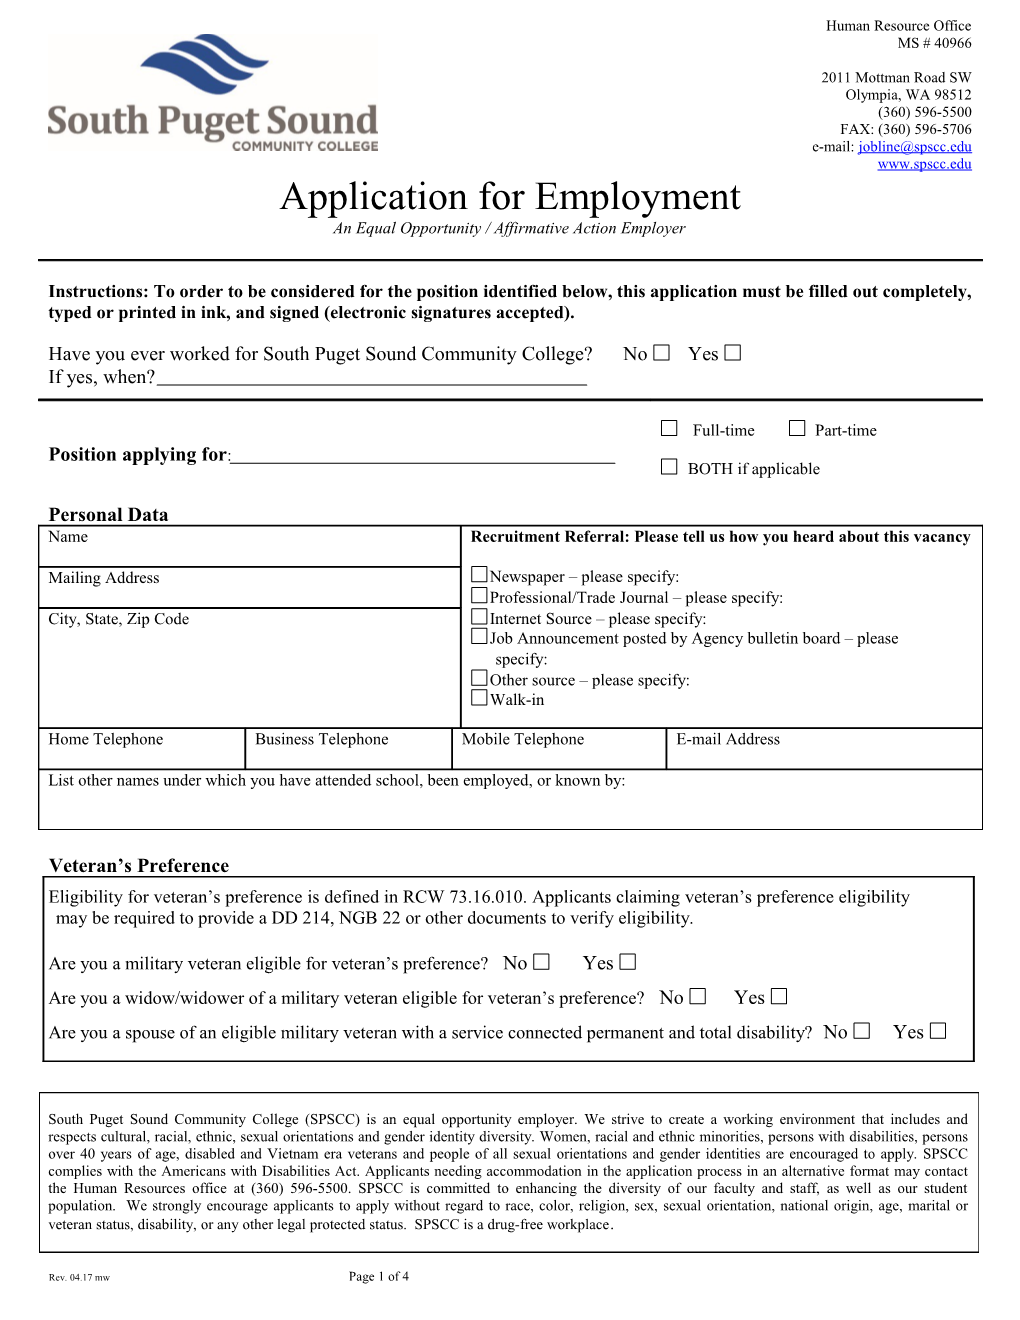 SPSCC Employment Application